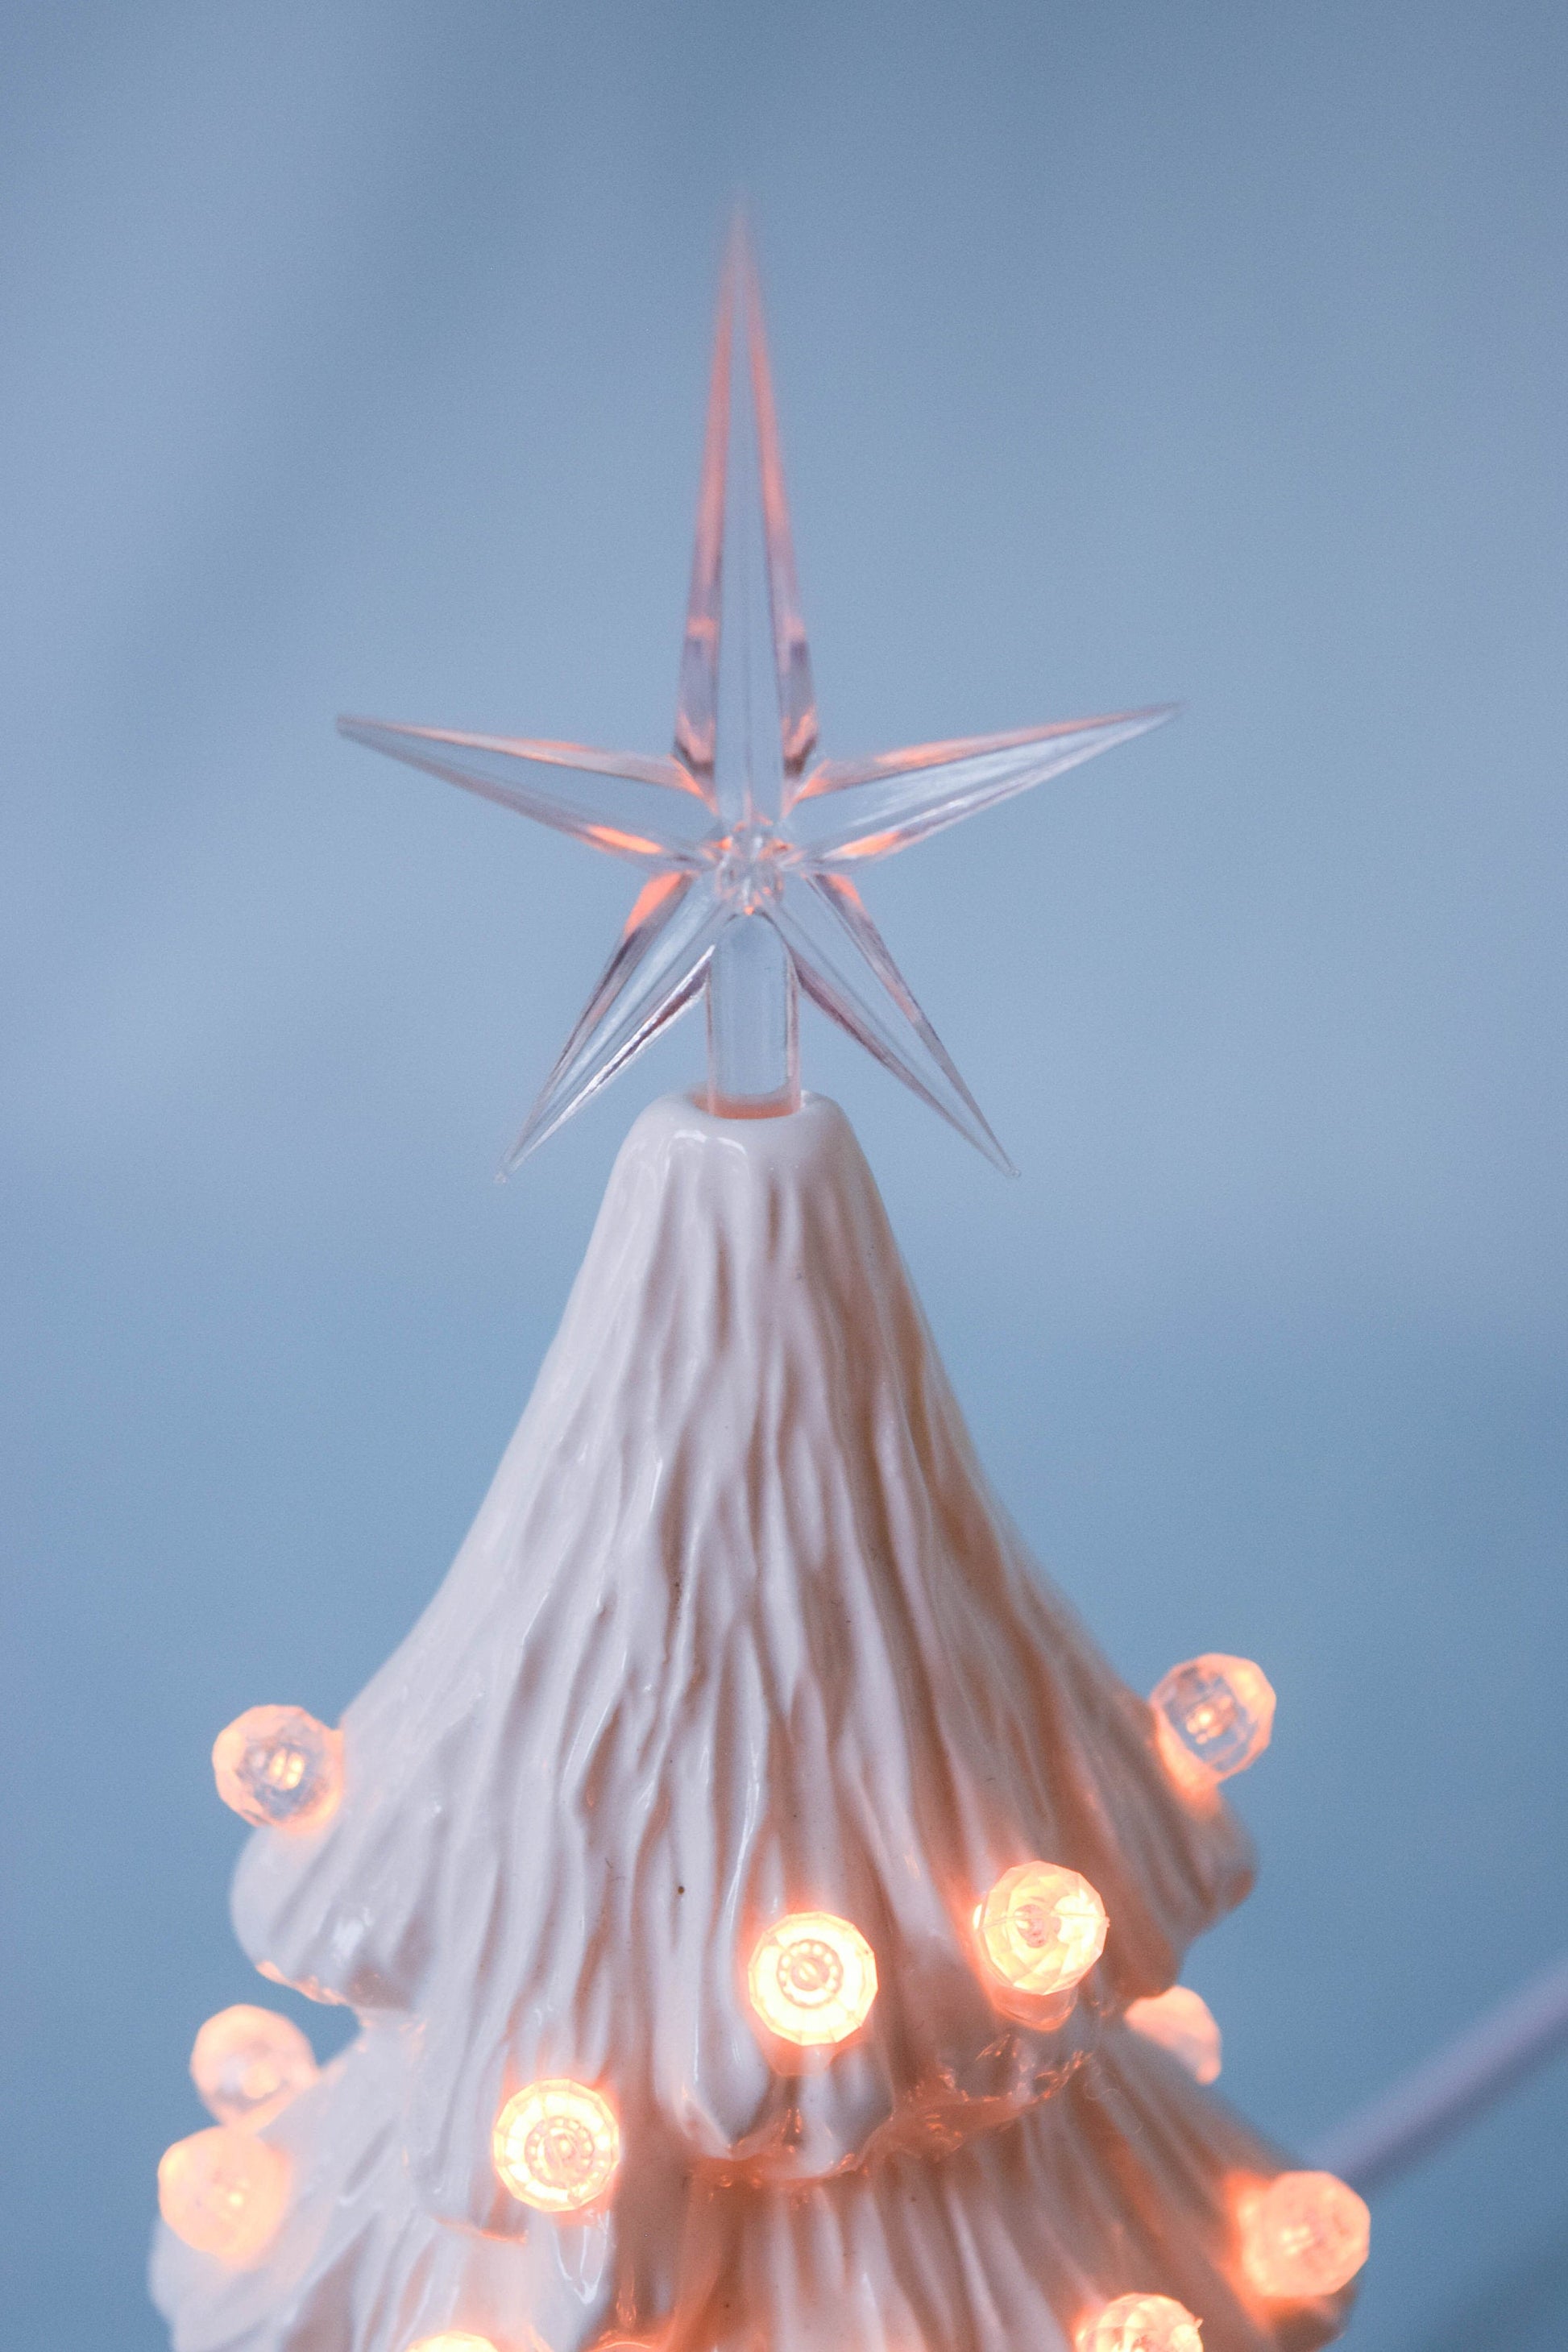 Ceramic White Christmas Tree, With Light Base